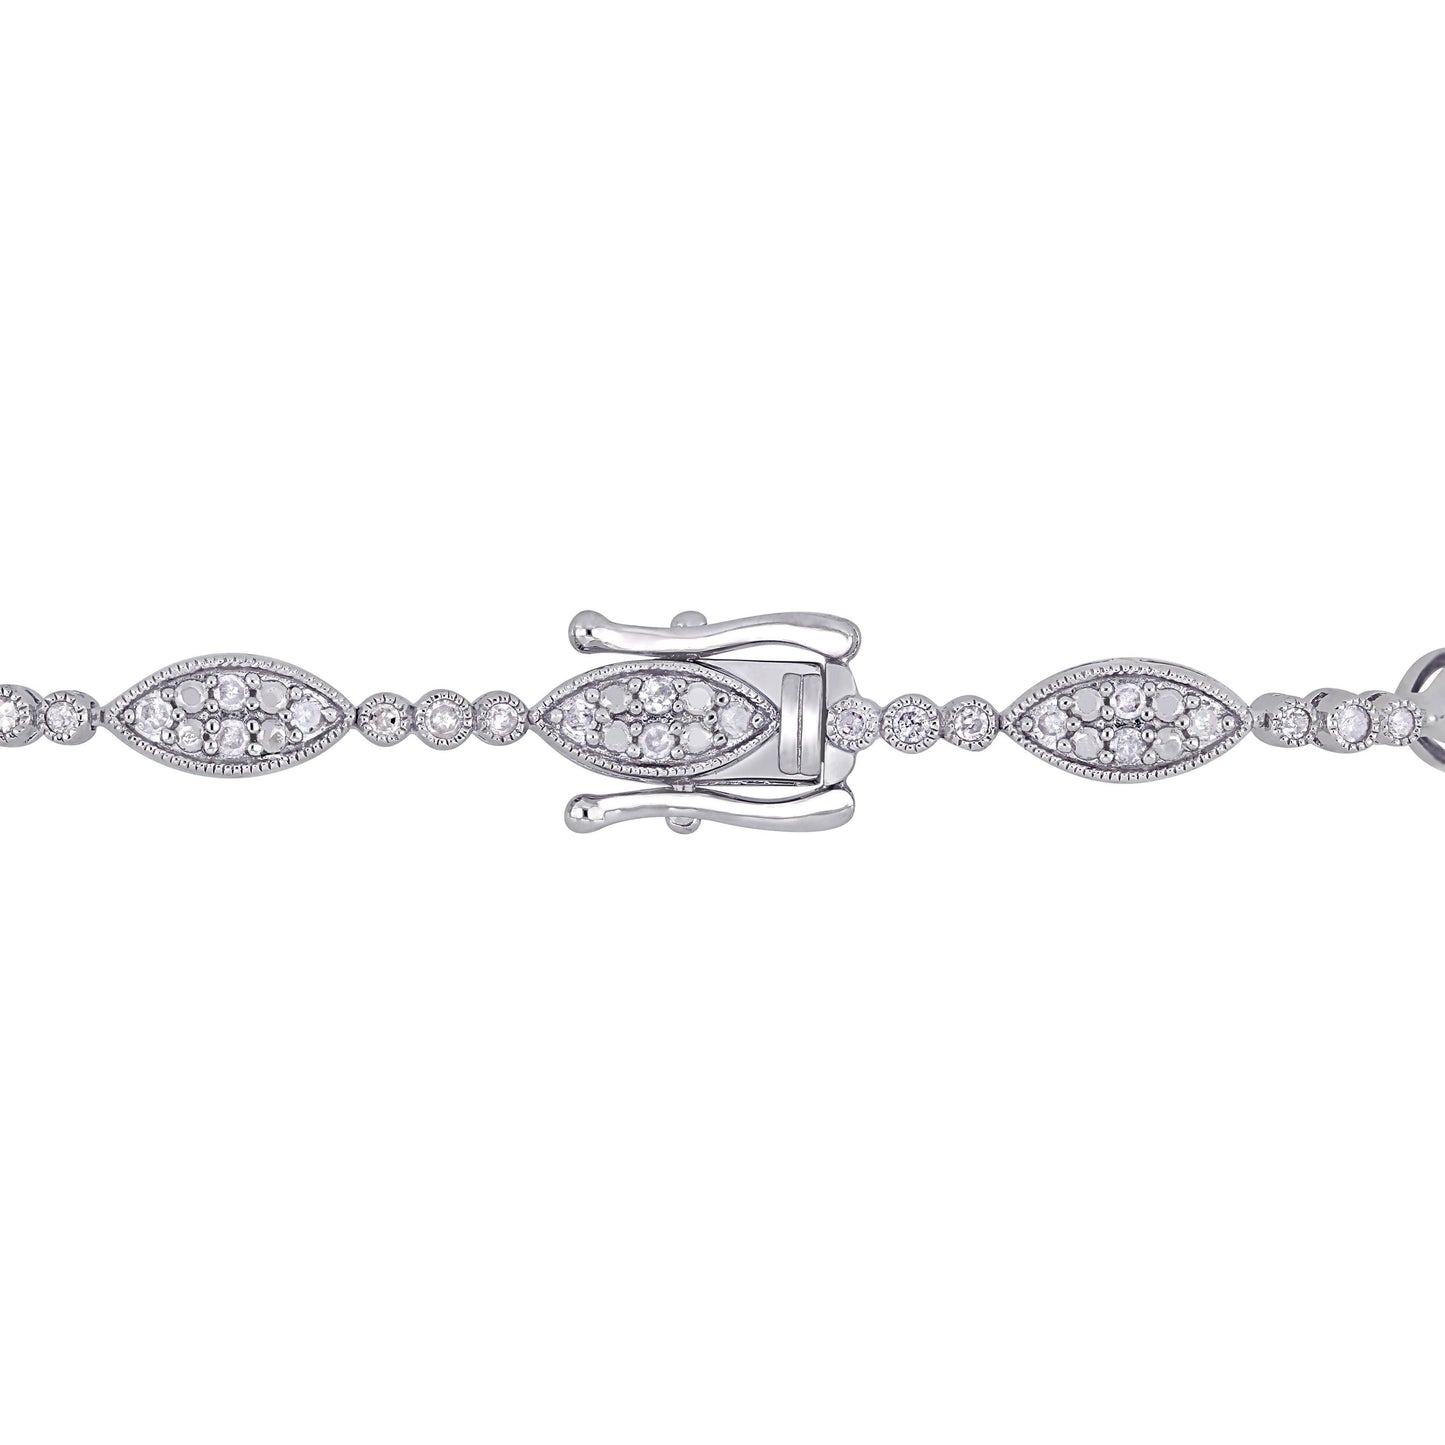 1.0ct Diamond Bracelet in Sterling Silver